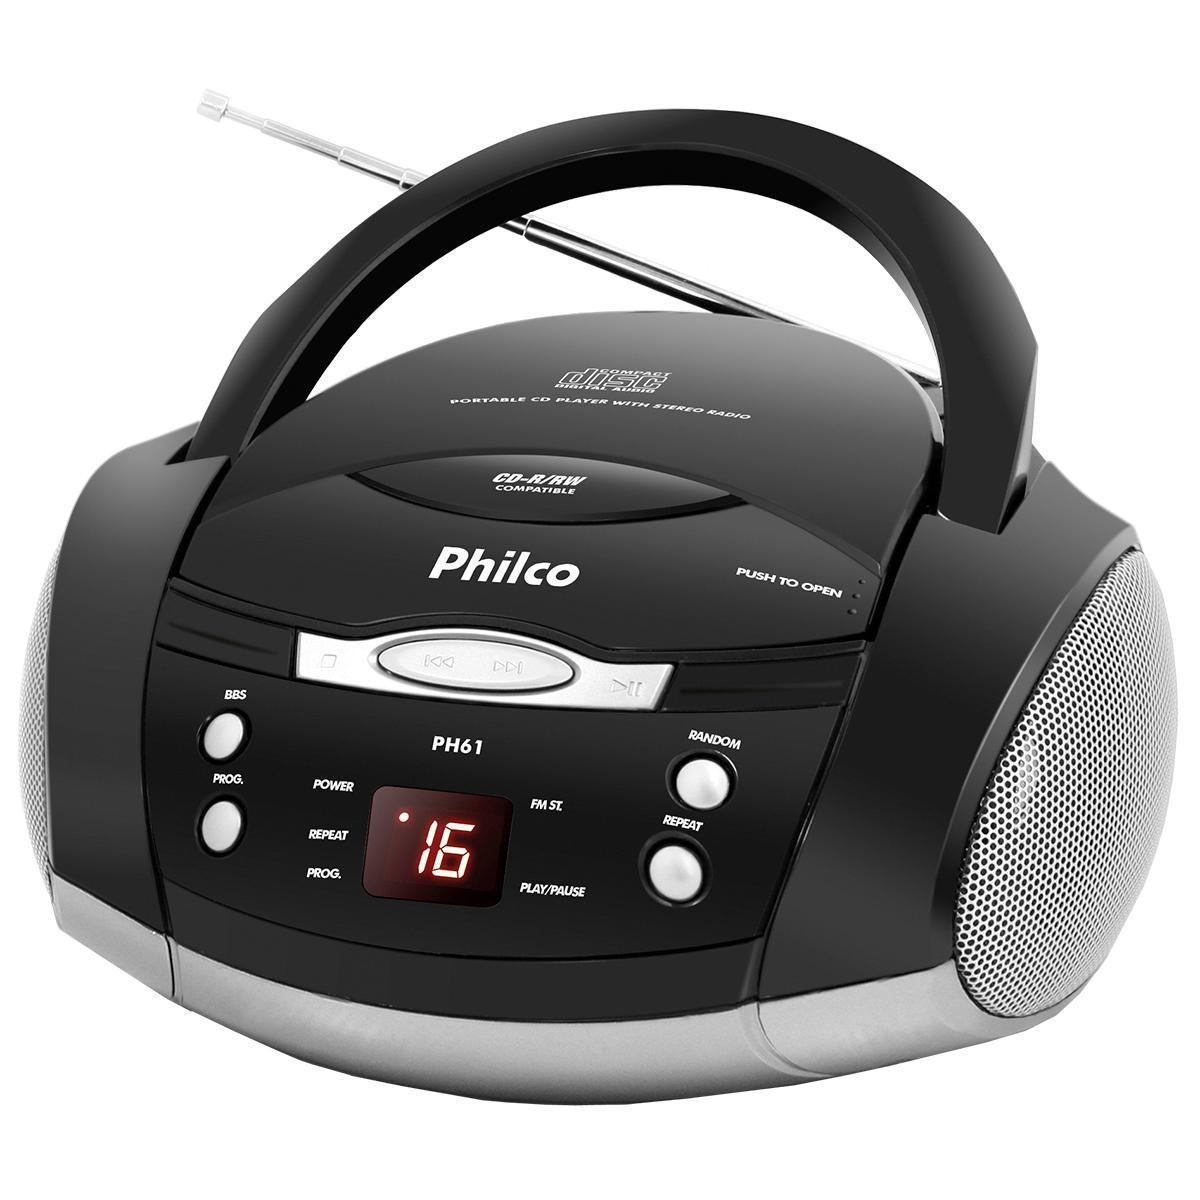 Som Portátil Philco Ph61 Com CD Player Bivolt Preto